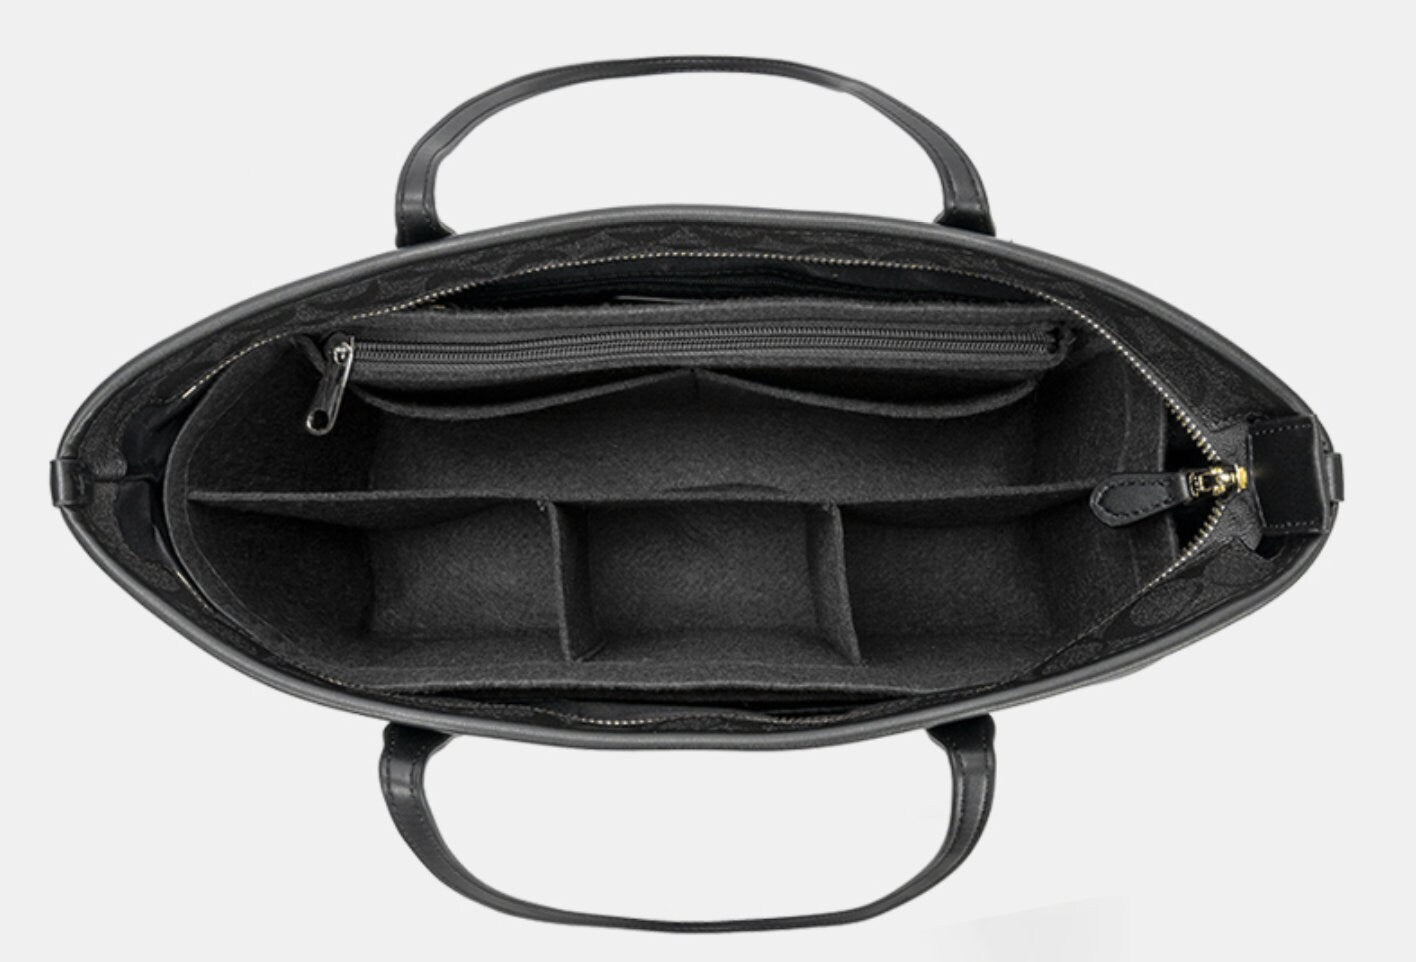 Bag Organizer For JETSET KARSON Tote Bag. Bag Insert For Classical Tote Bag.